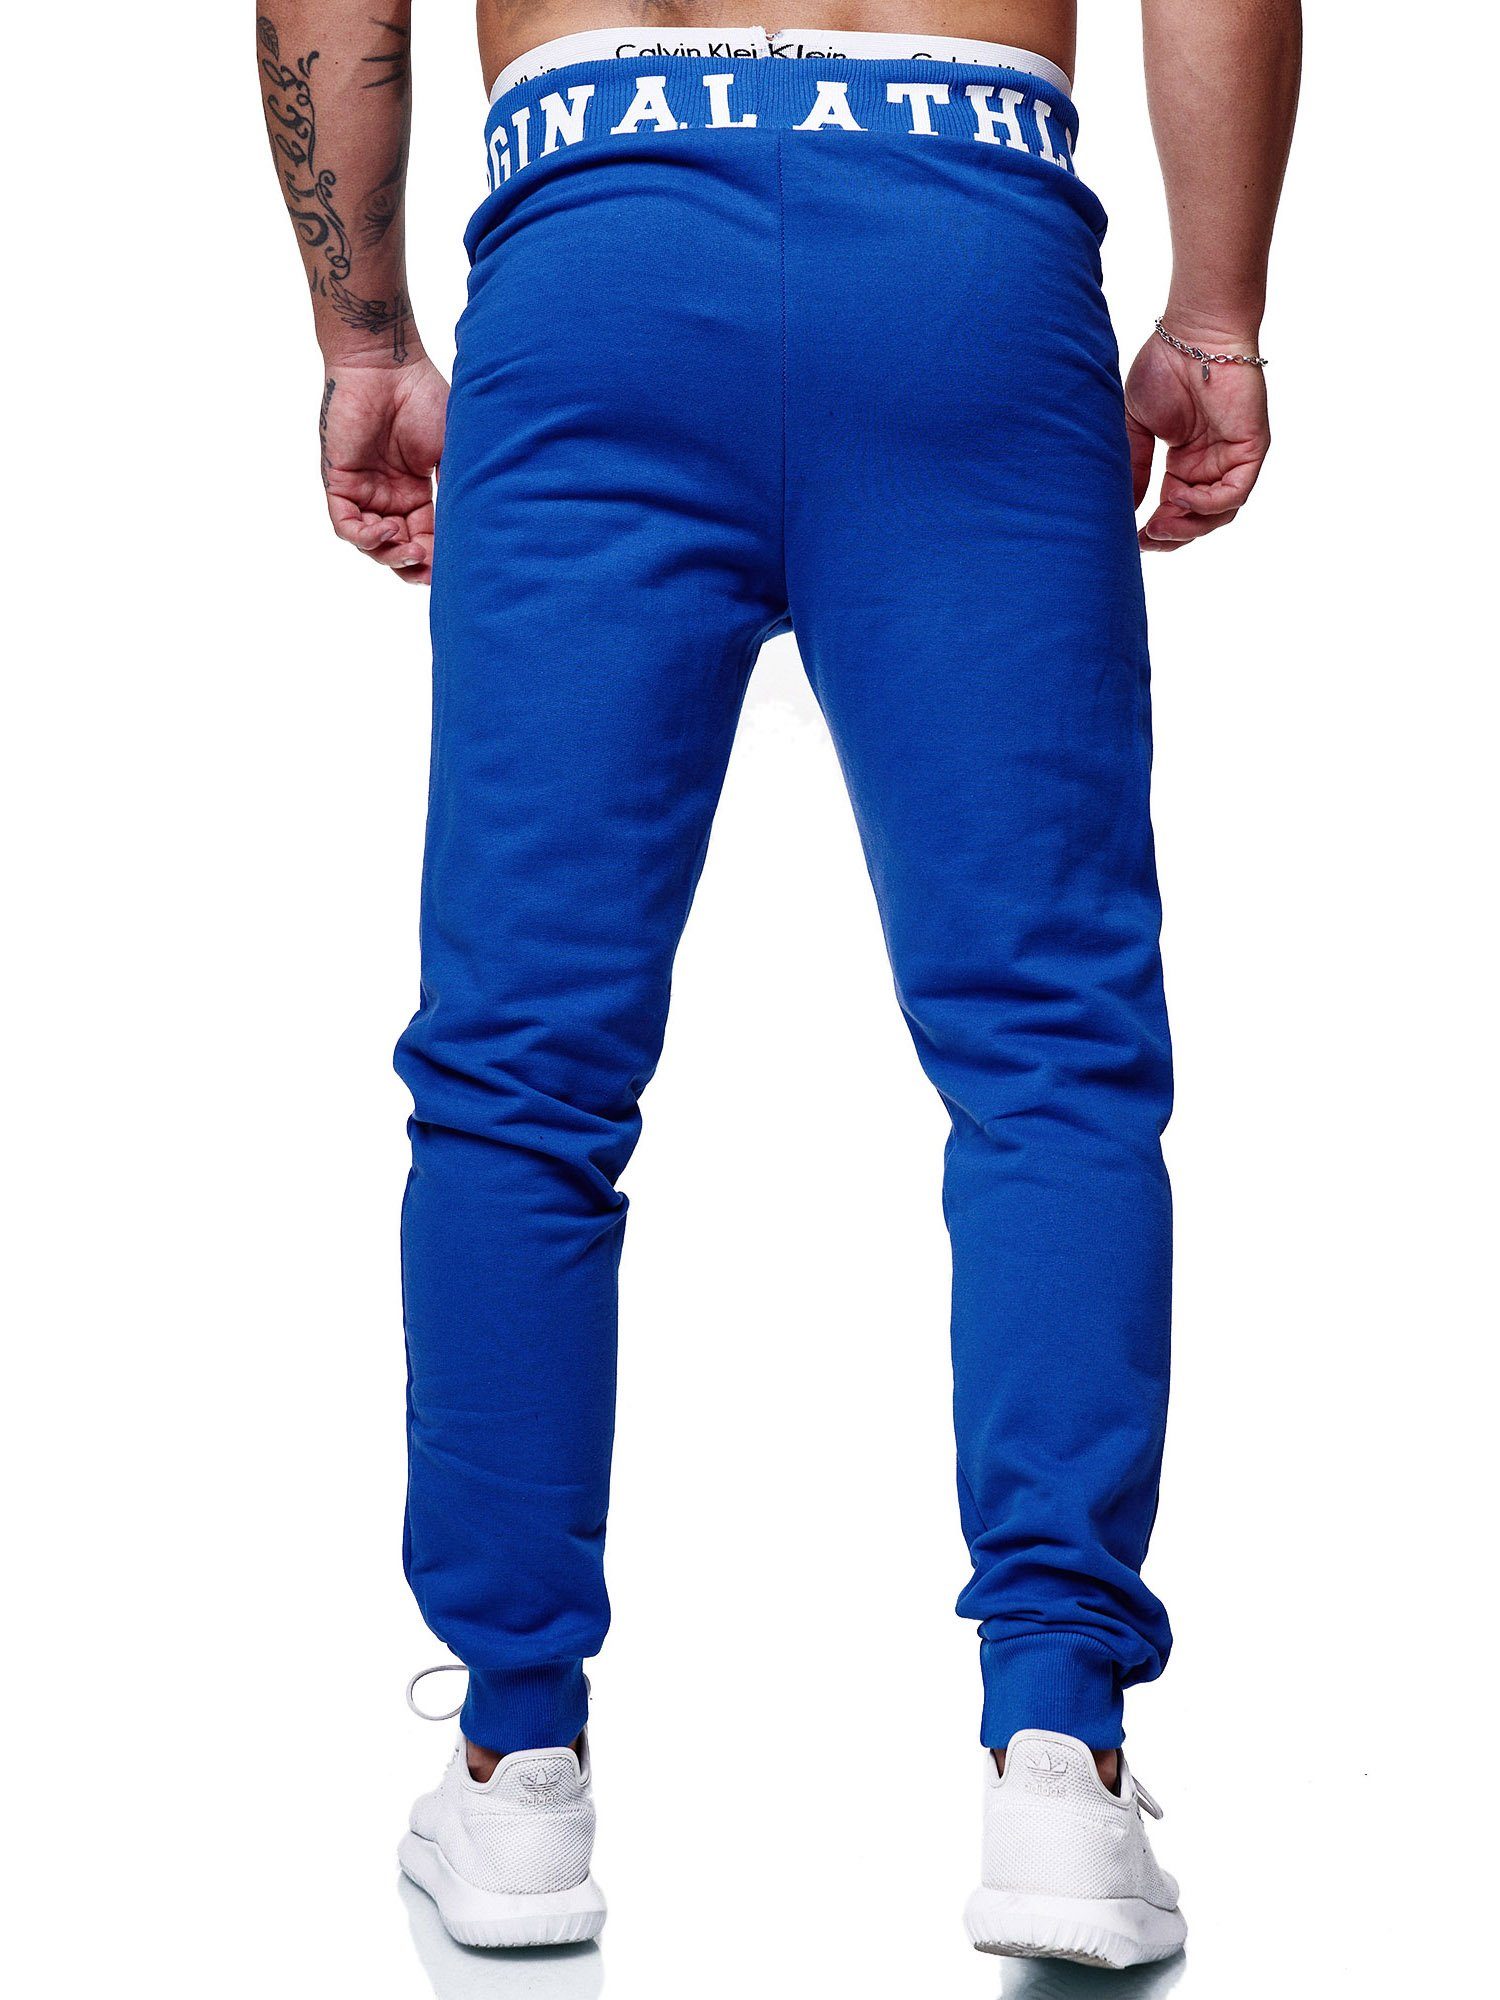 (1-tlg) Herren Männer Jogginghose Trainingshose 601 Blau Sweatpants Code47 Jogginghose Sporthose